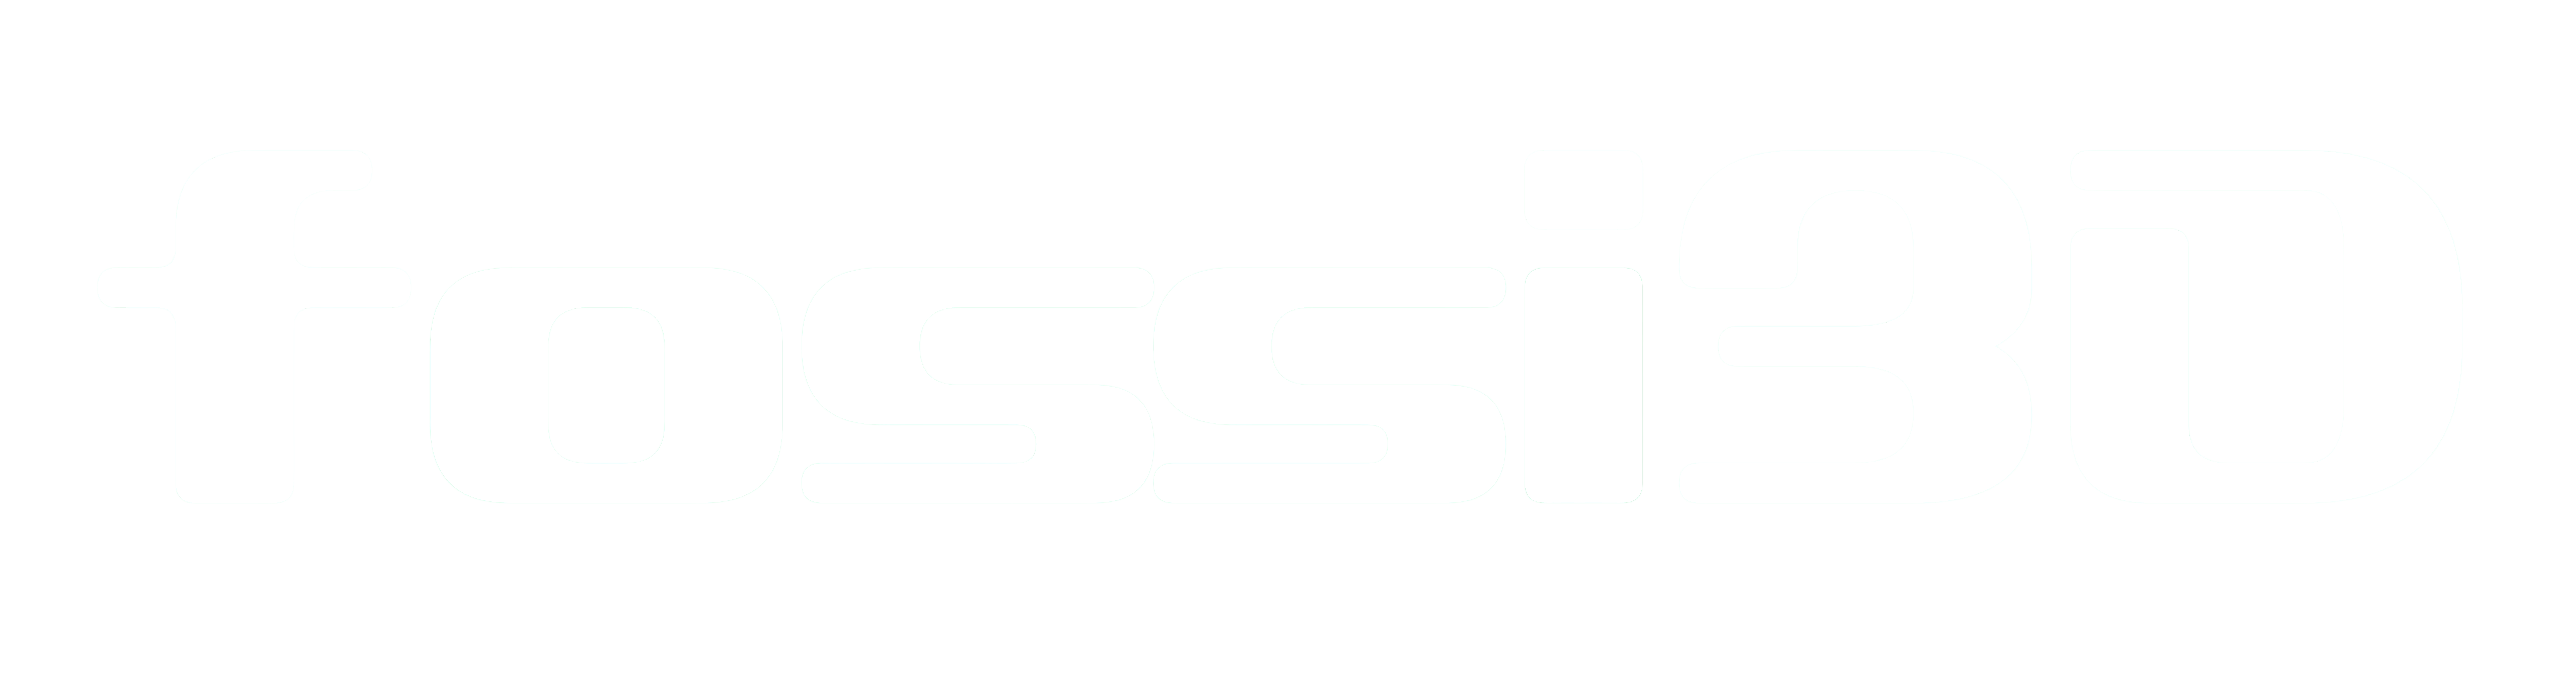 Fossi logo